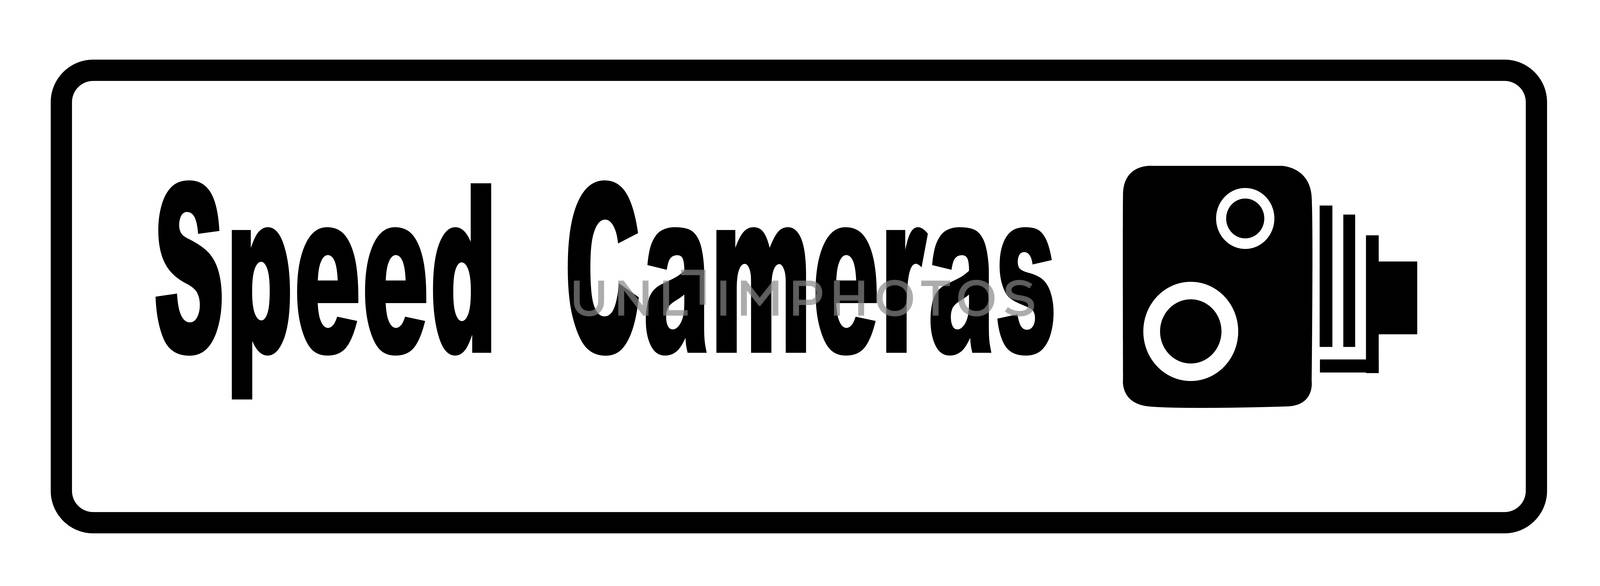 A traditional speeding camera warning sign